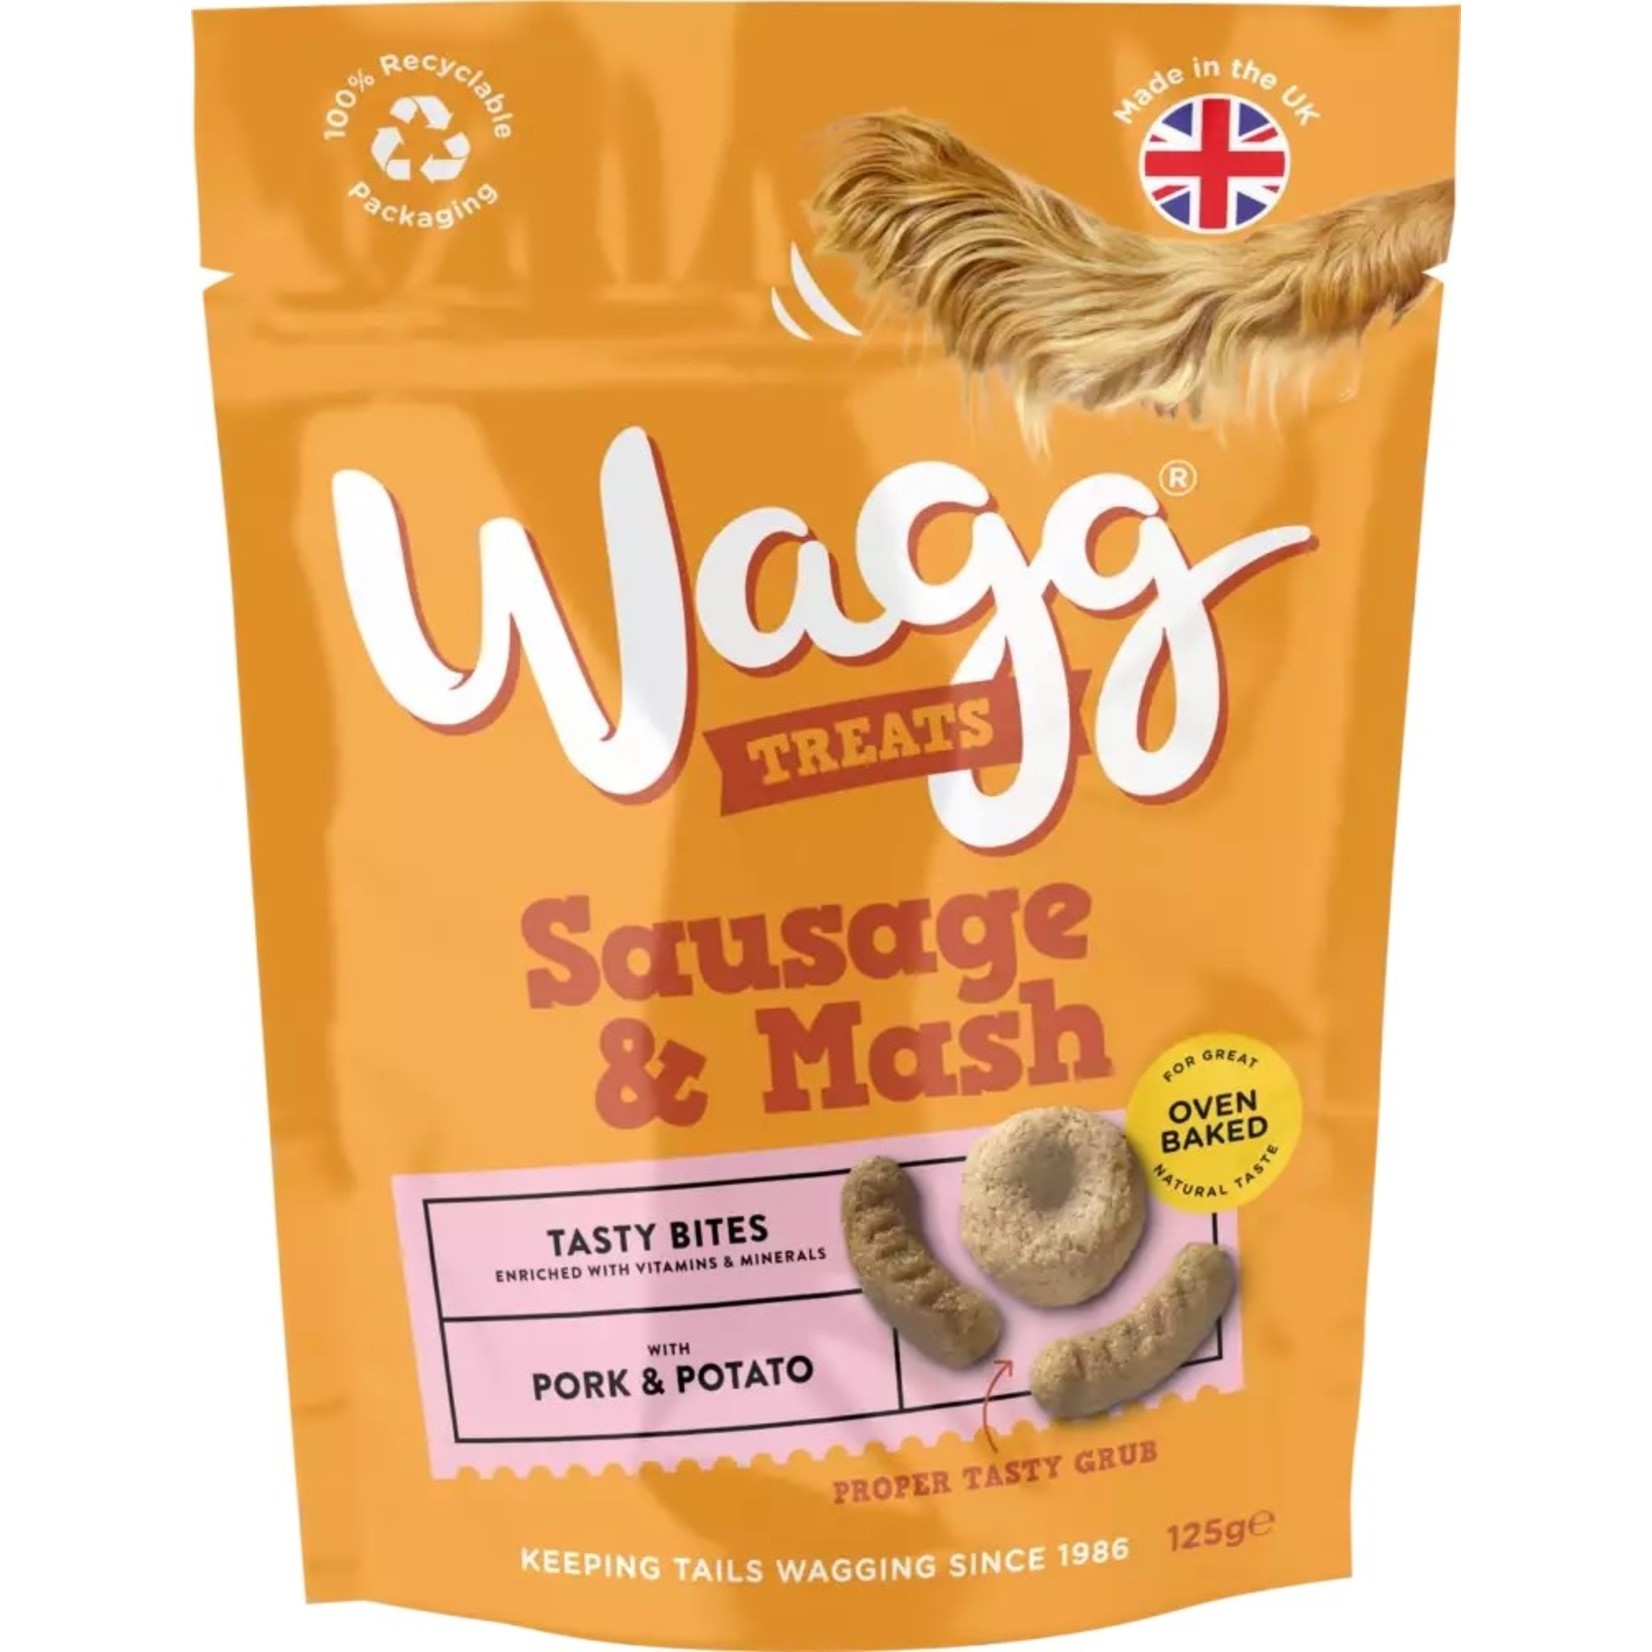 Wagg Sausage & Mash Oven Baked Dog Treats, 125g